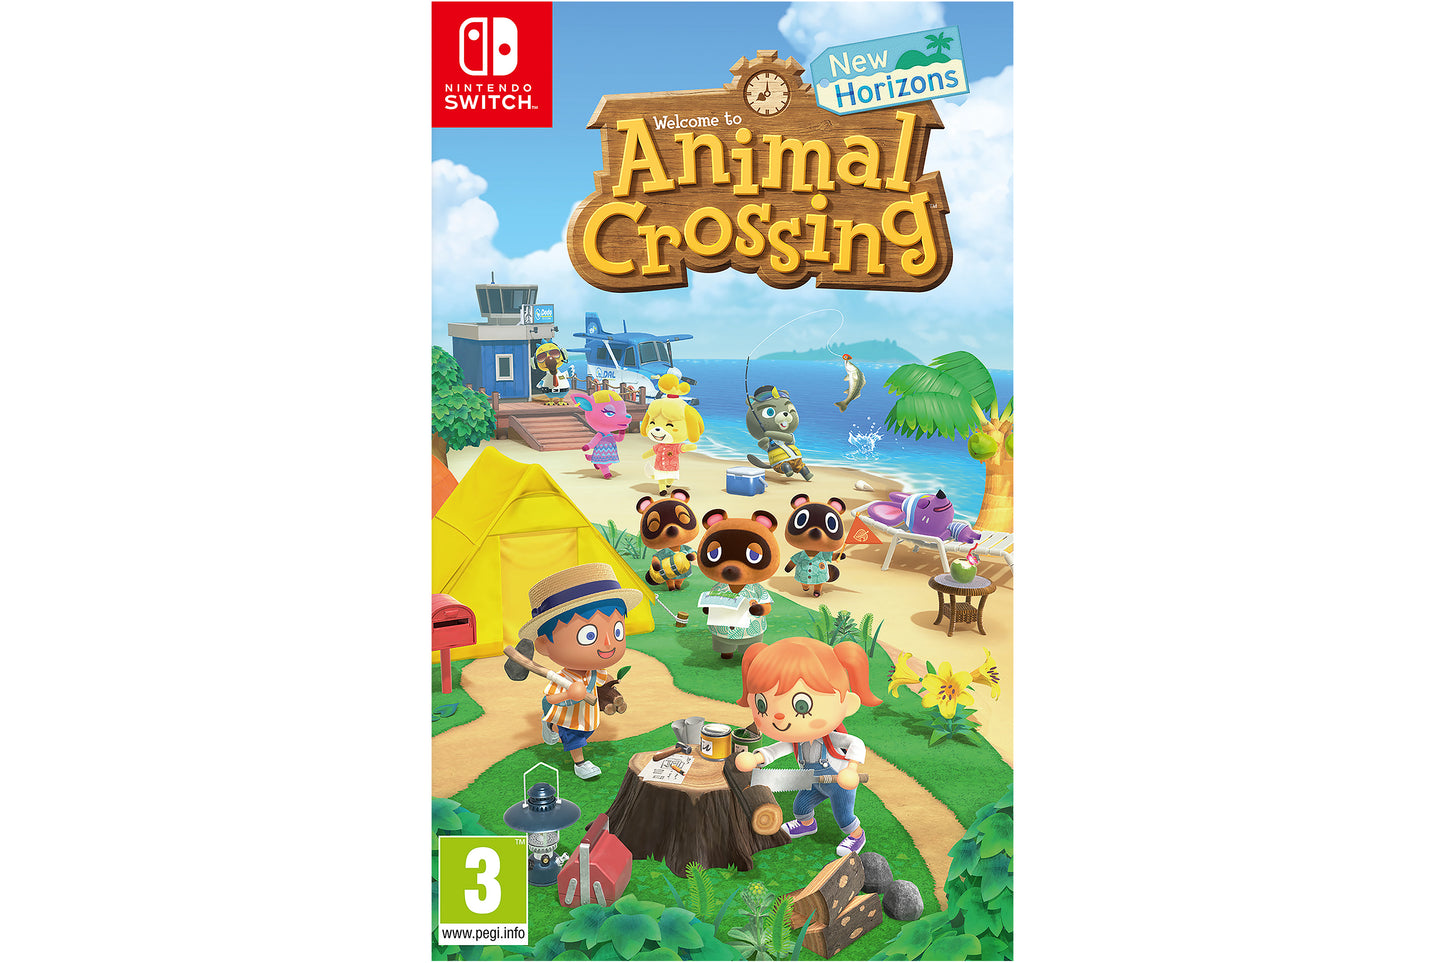 Nintendo Switch Animal Crossing: New Horizons Game - maplin.co.uk